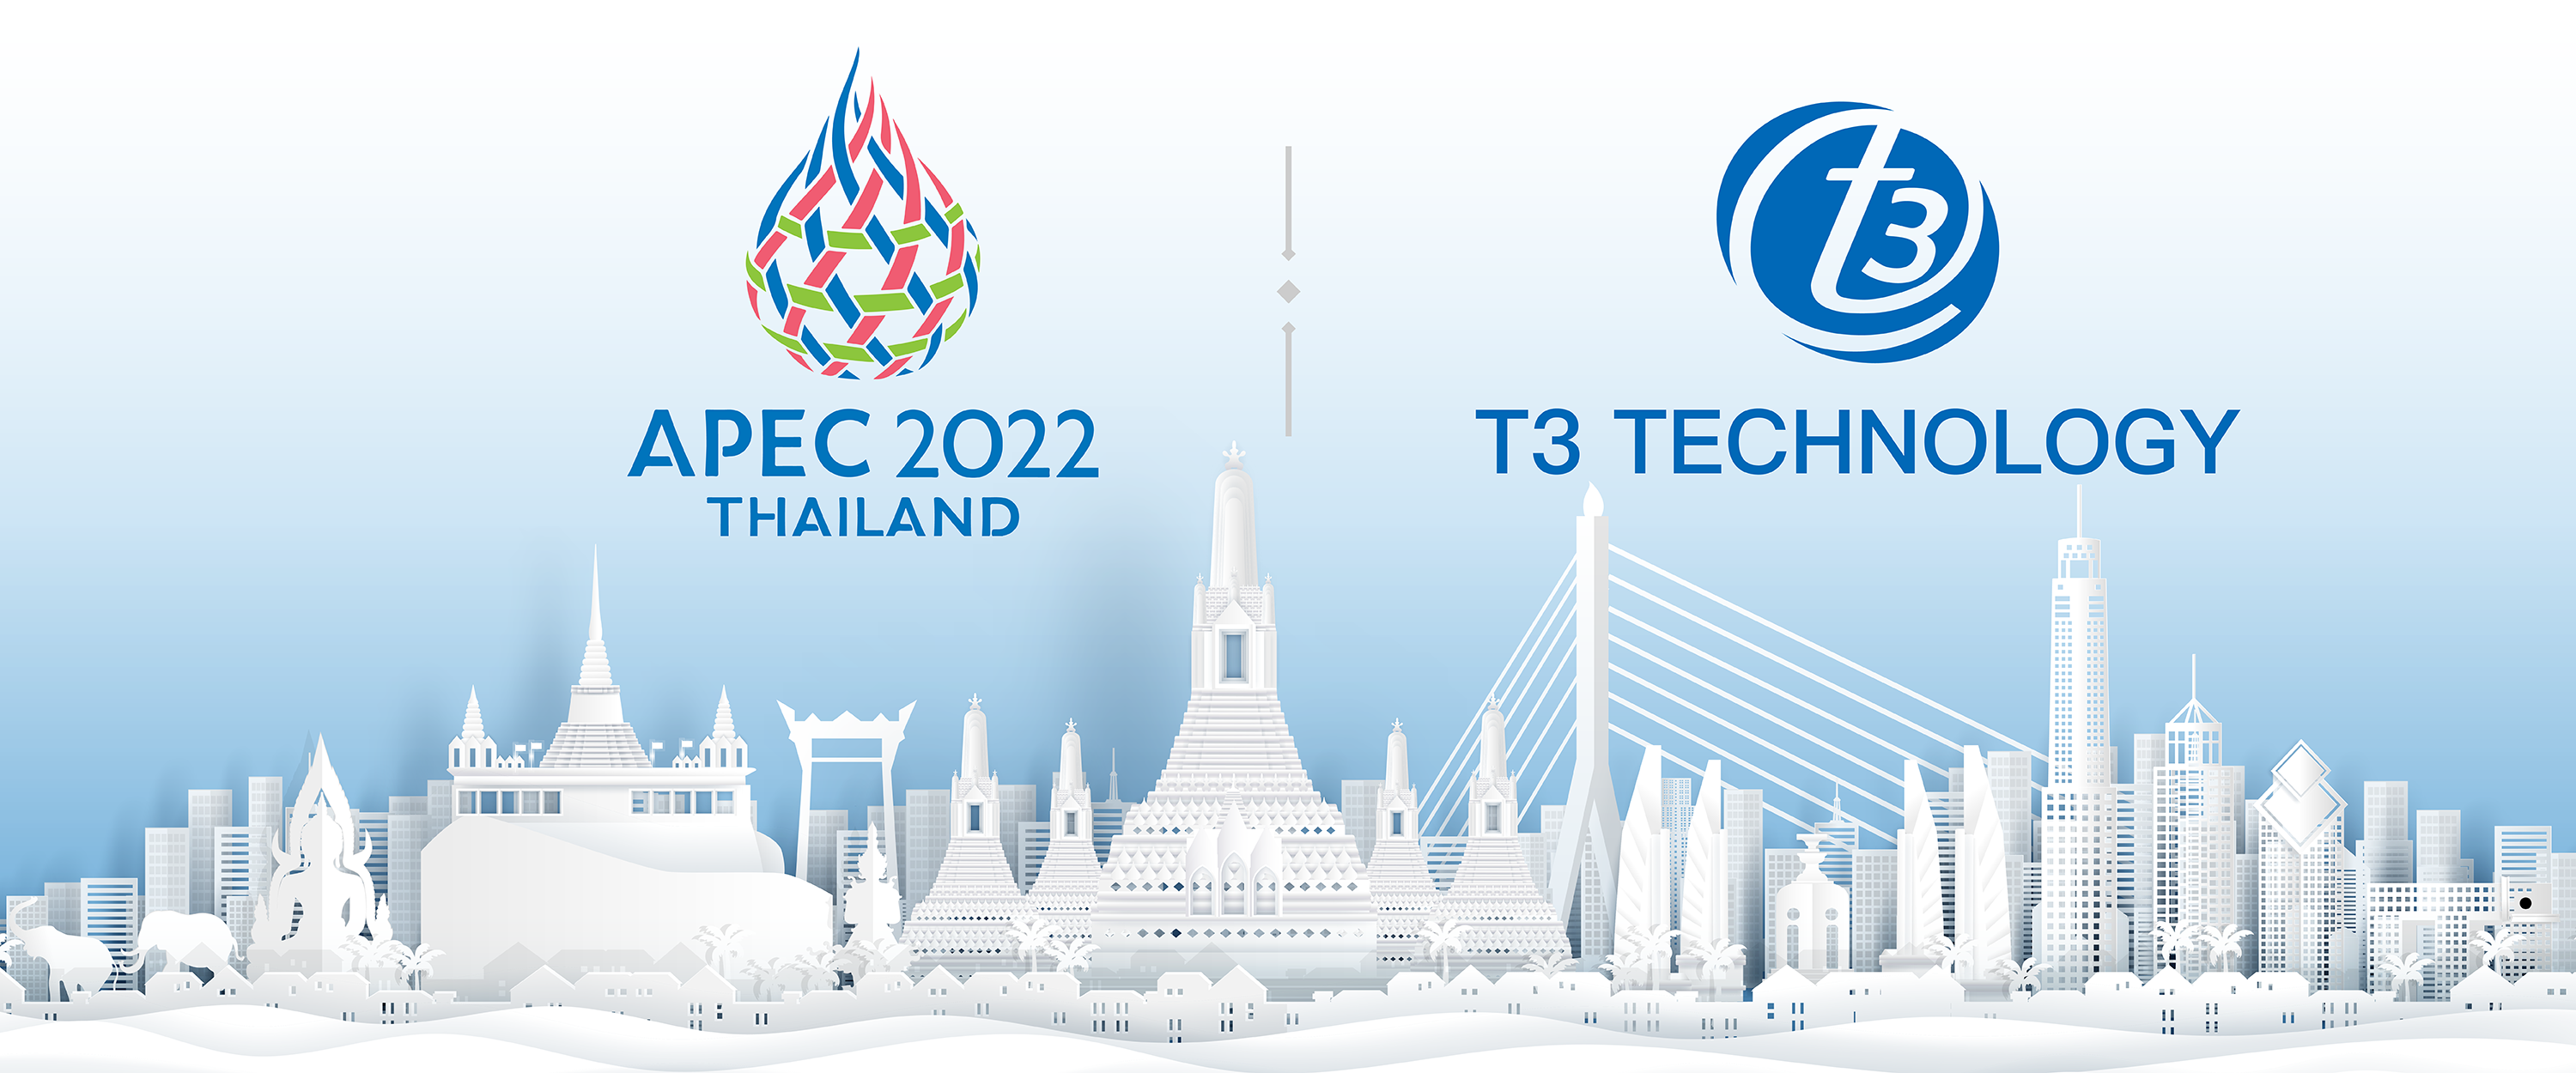 T3 Technology助力泰国APEC 2022峰会